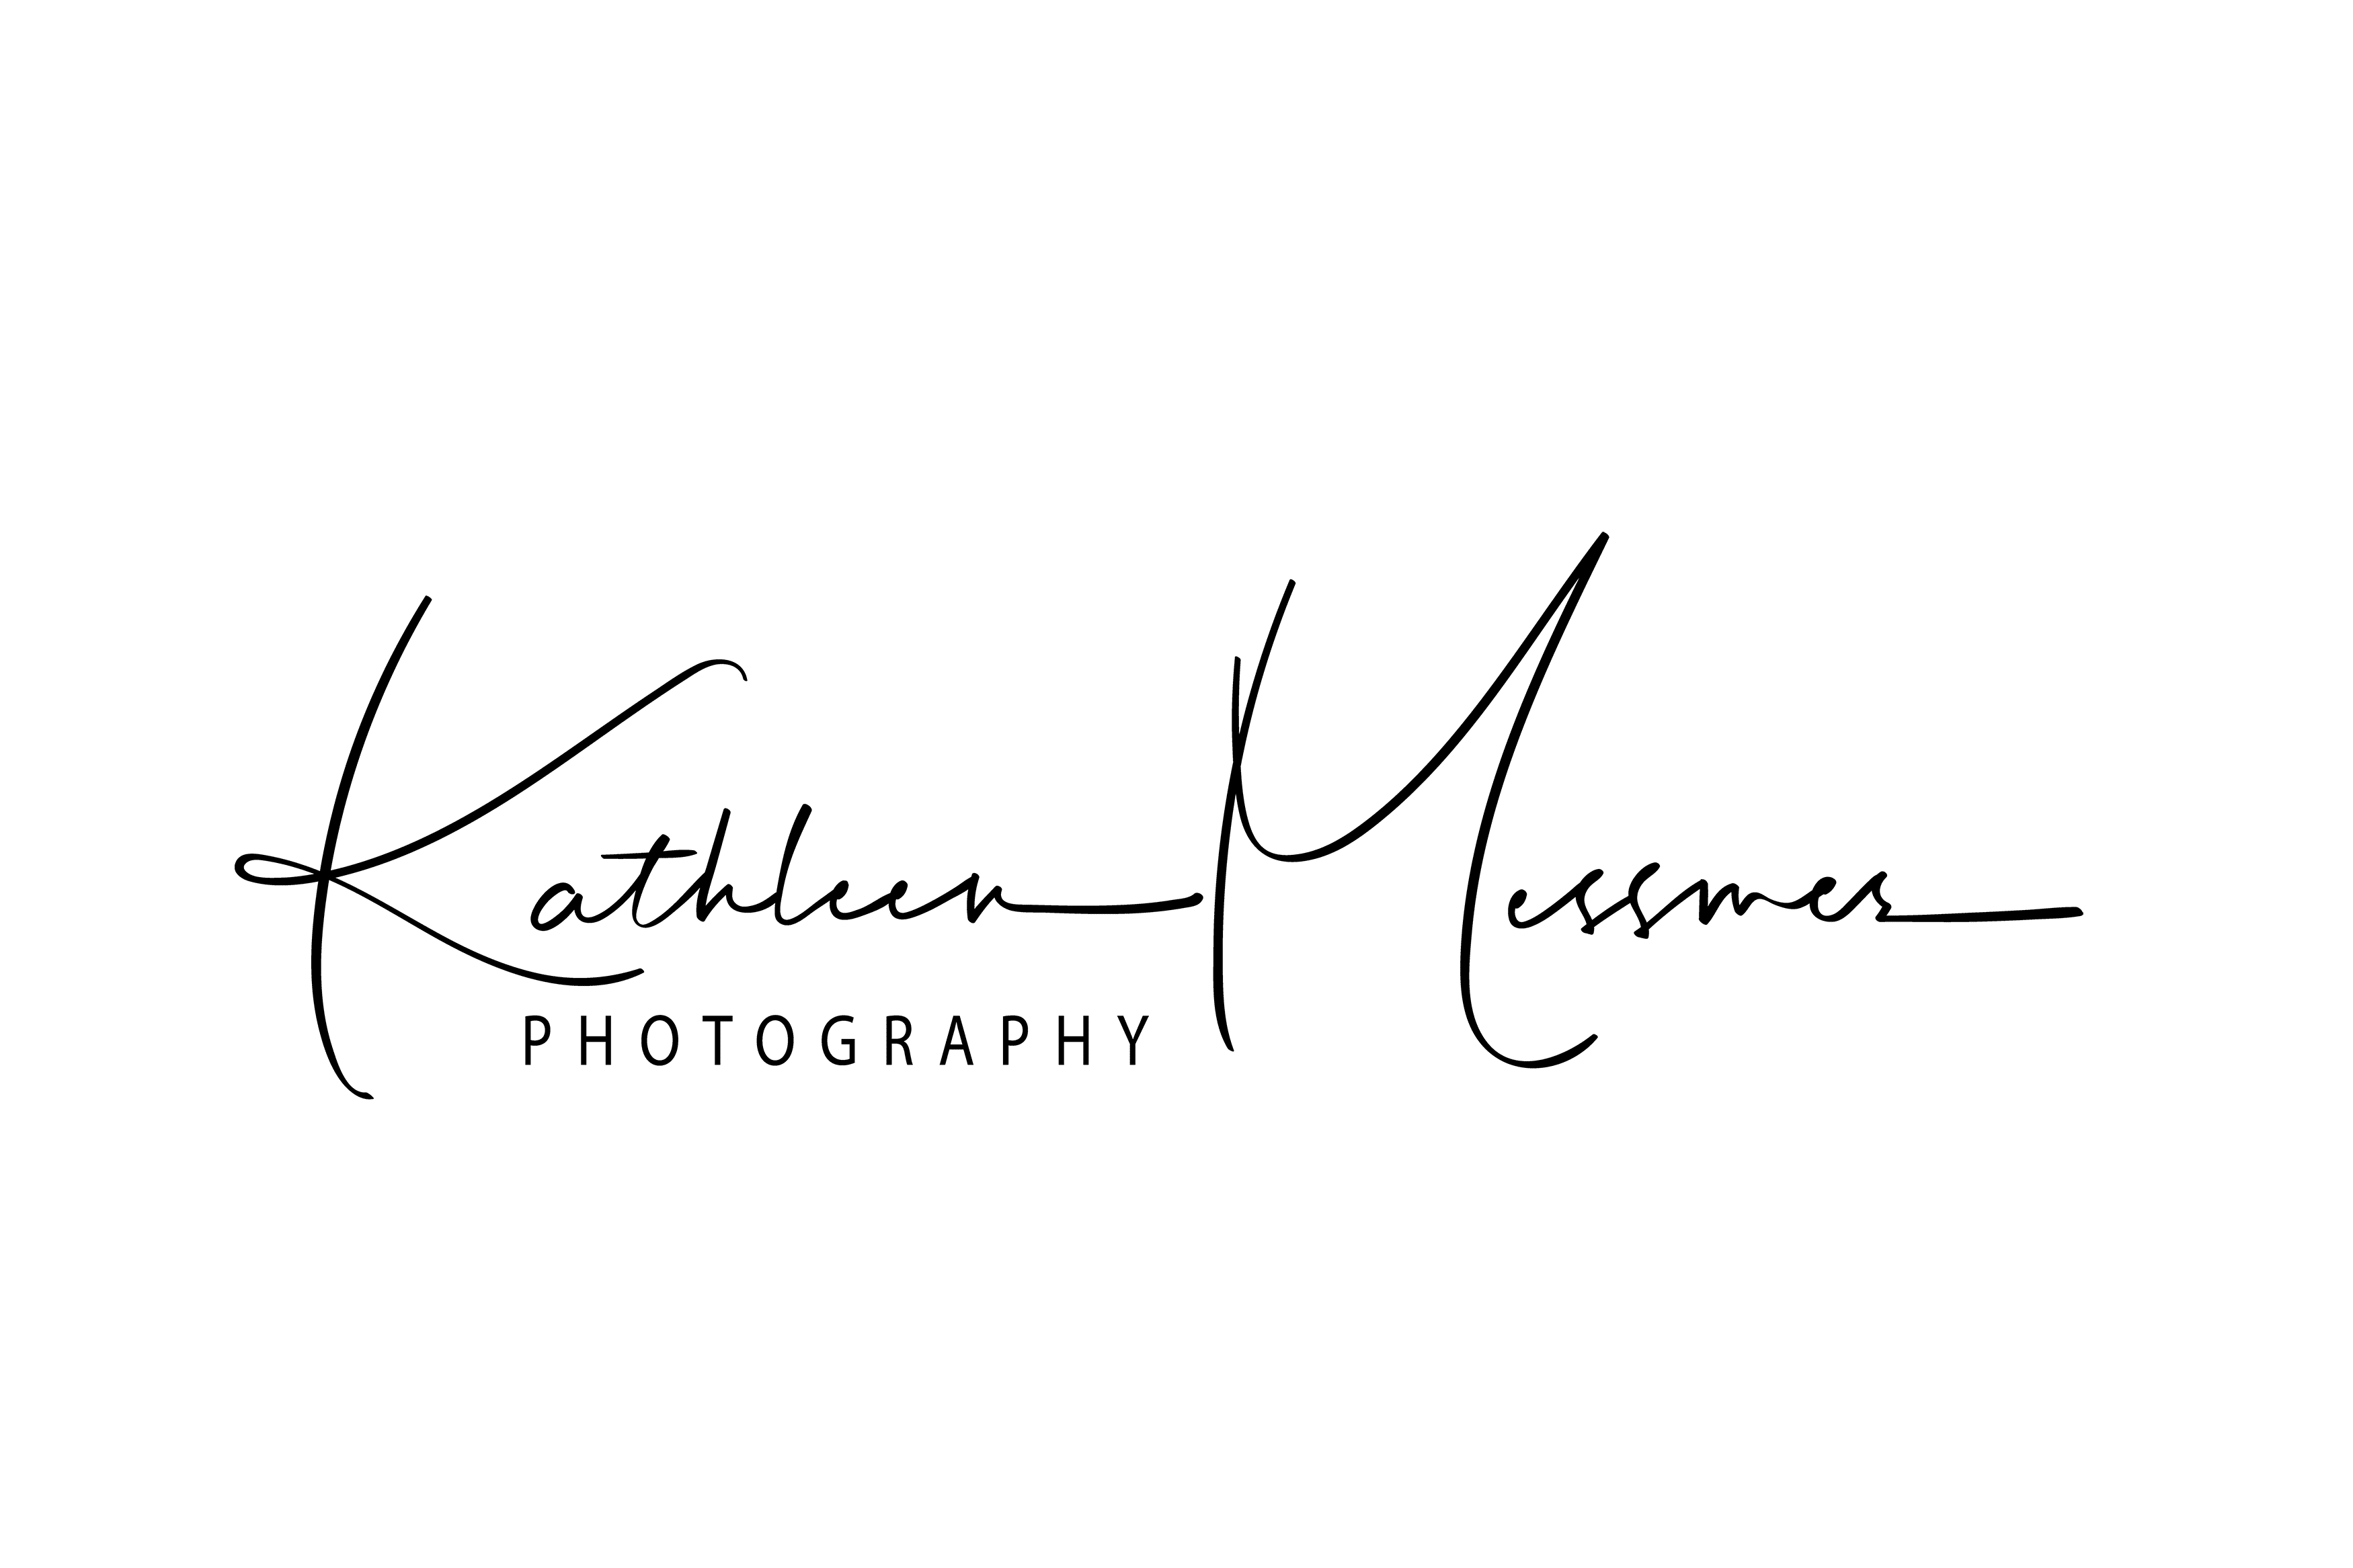 Kathleen Messmer Photography